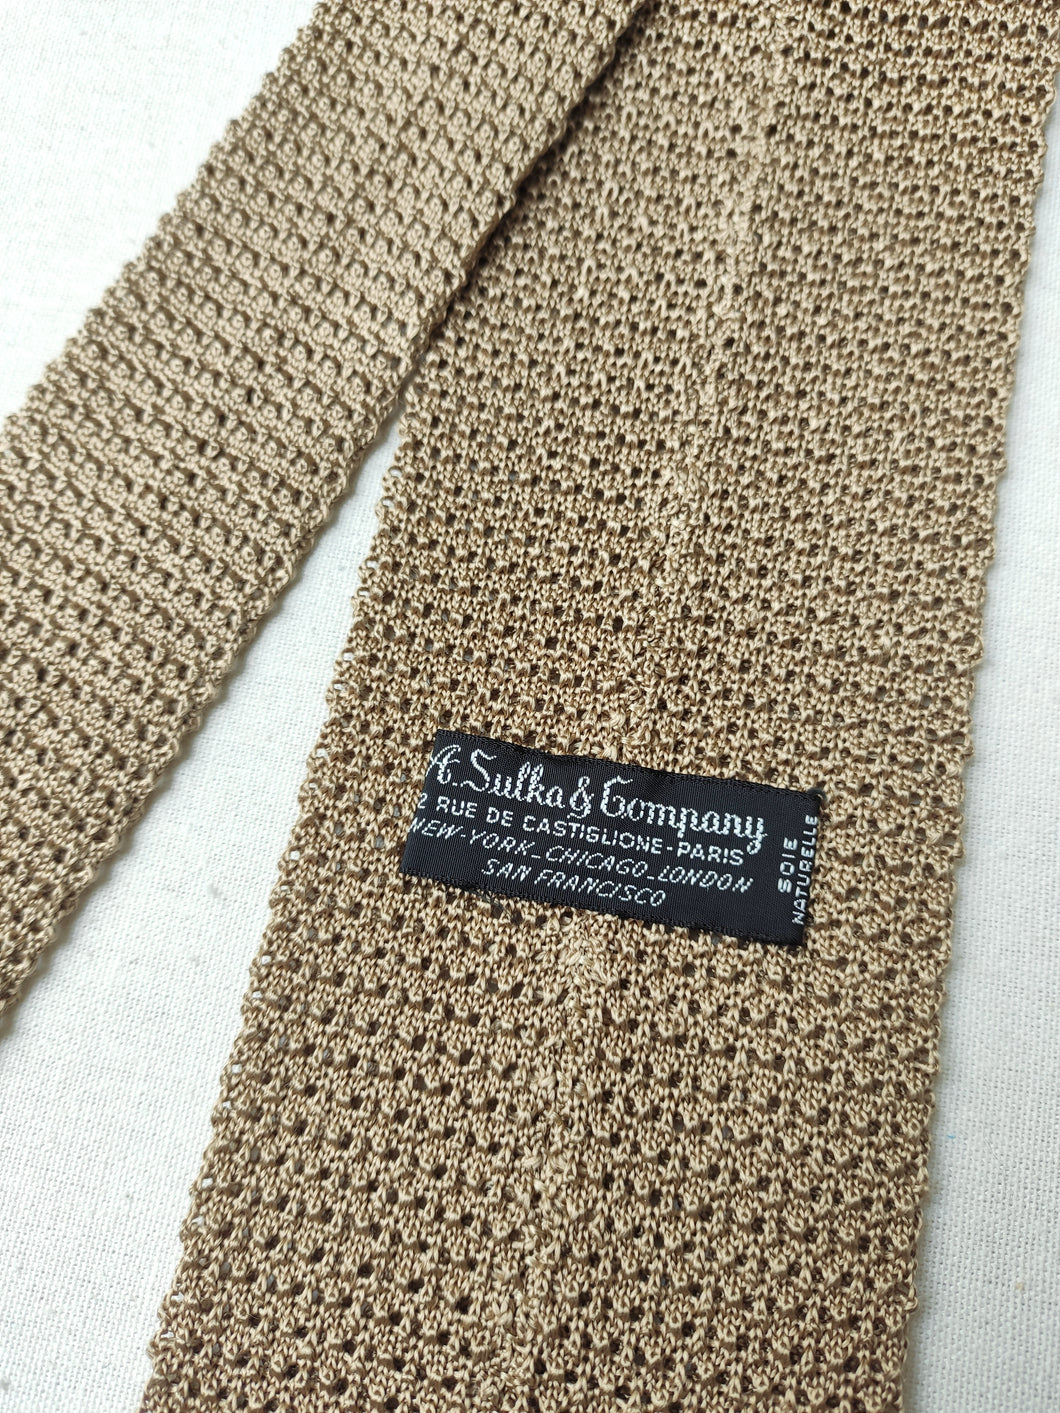 A. Sulka & Company cravate beige vintage en tricot de soie Made in Italy